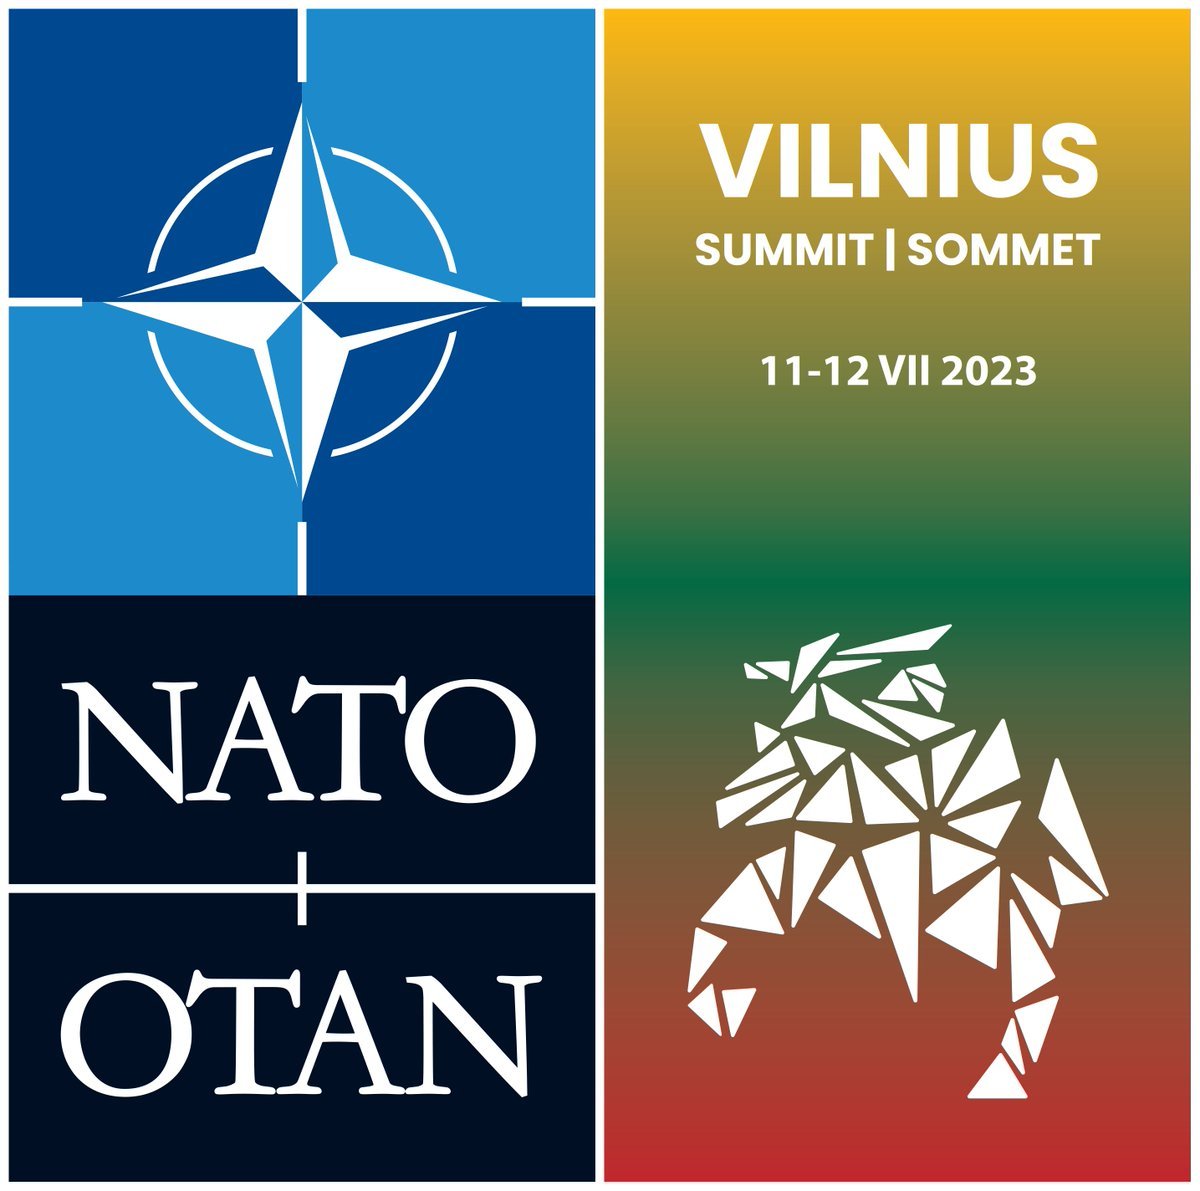 2023 NATO VILNIUS LITHUANIA SUMMIT